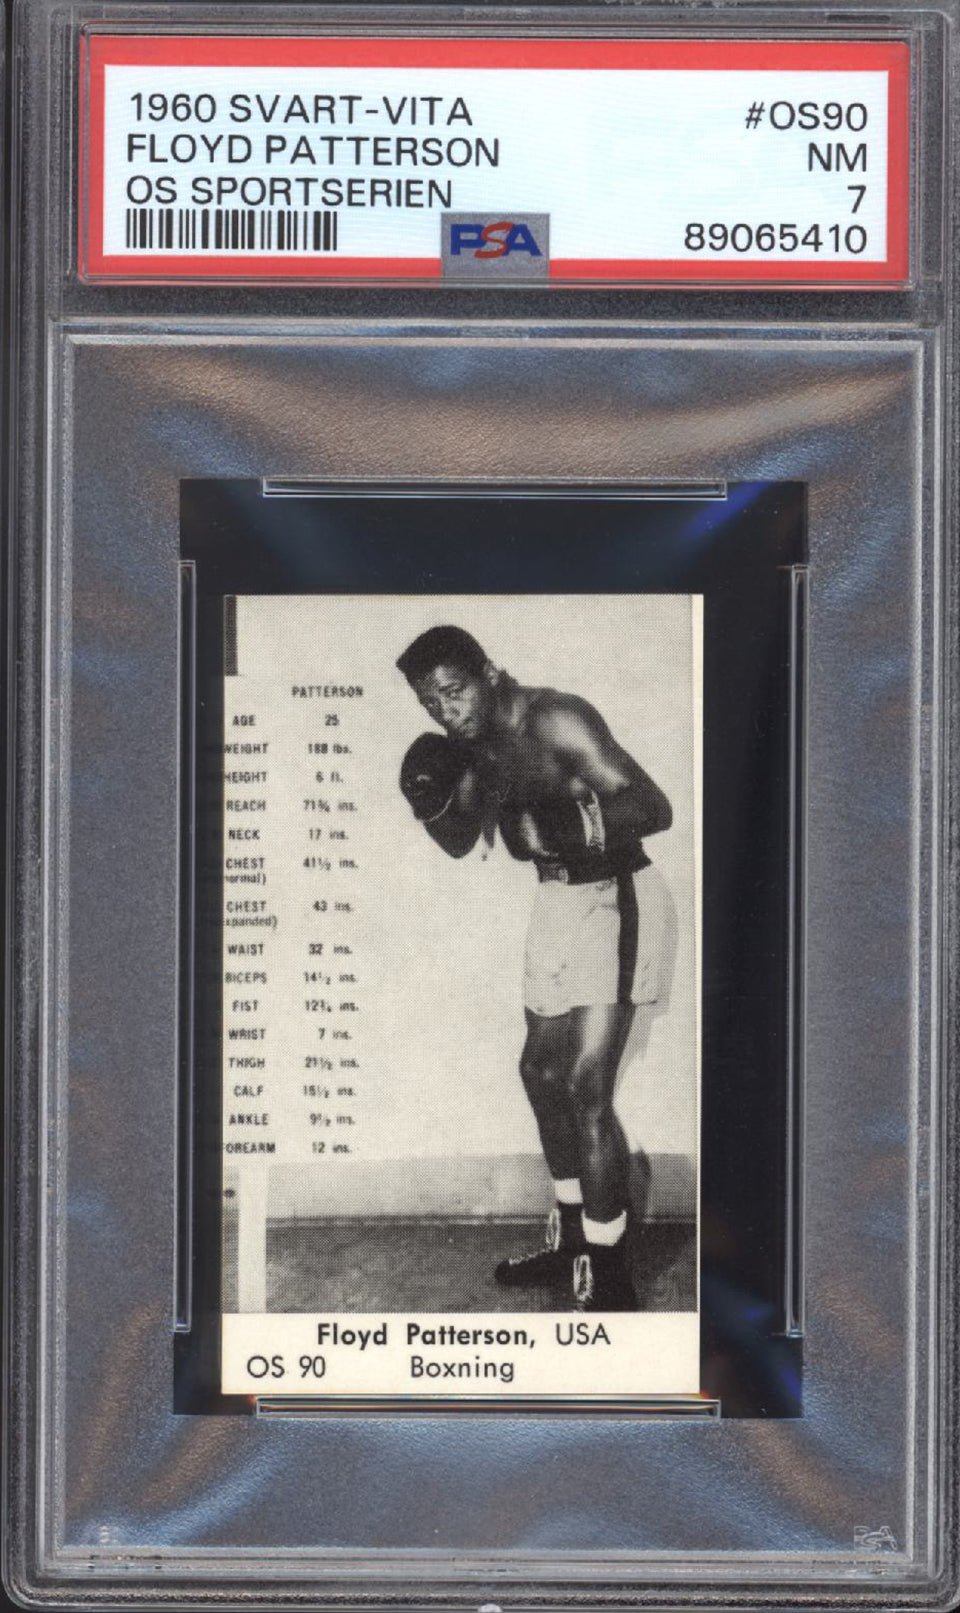 FLOYD PATTERSON PSA 7 1960 Svart - Vita OS Sportserien Boxing #OS90 Misc - Sports Base Graded Cards - Hobby Gems